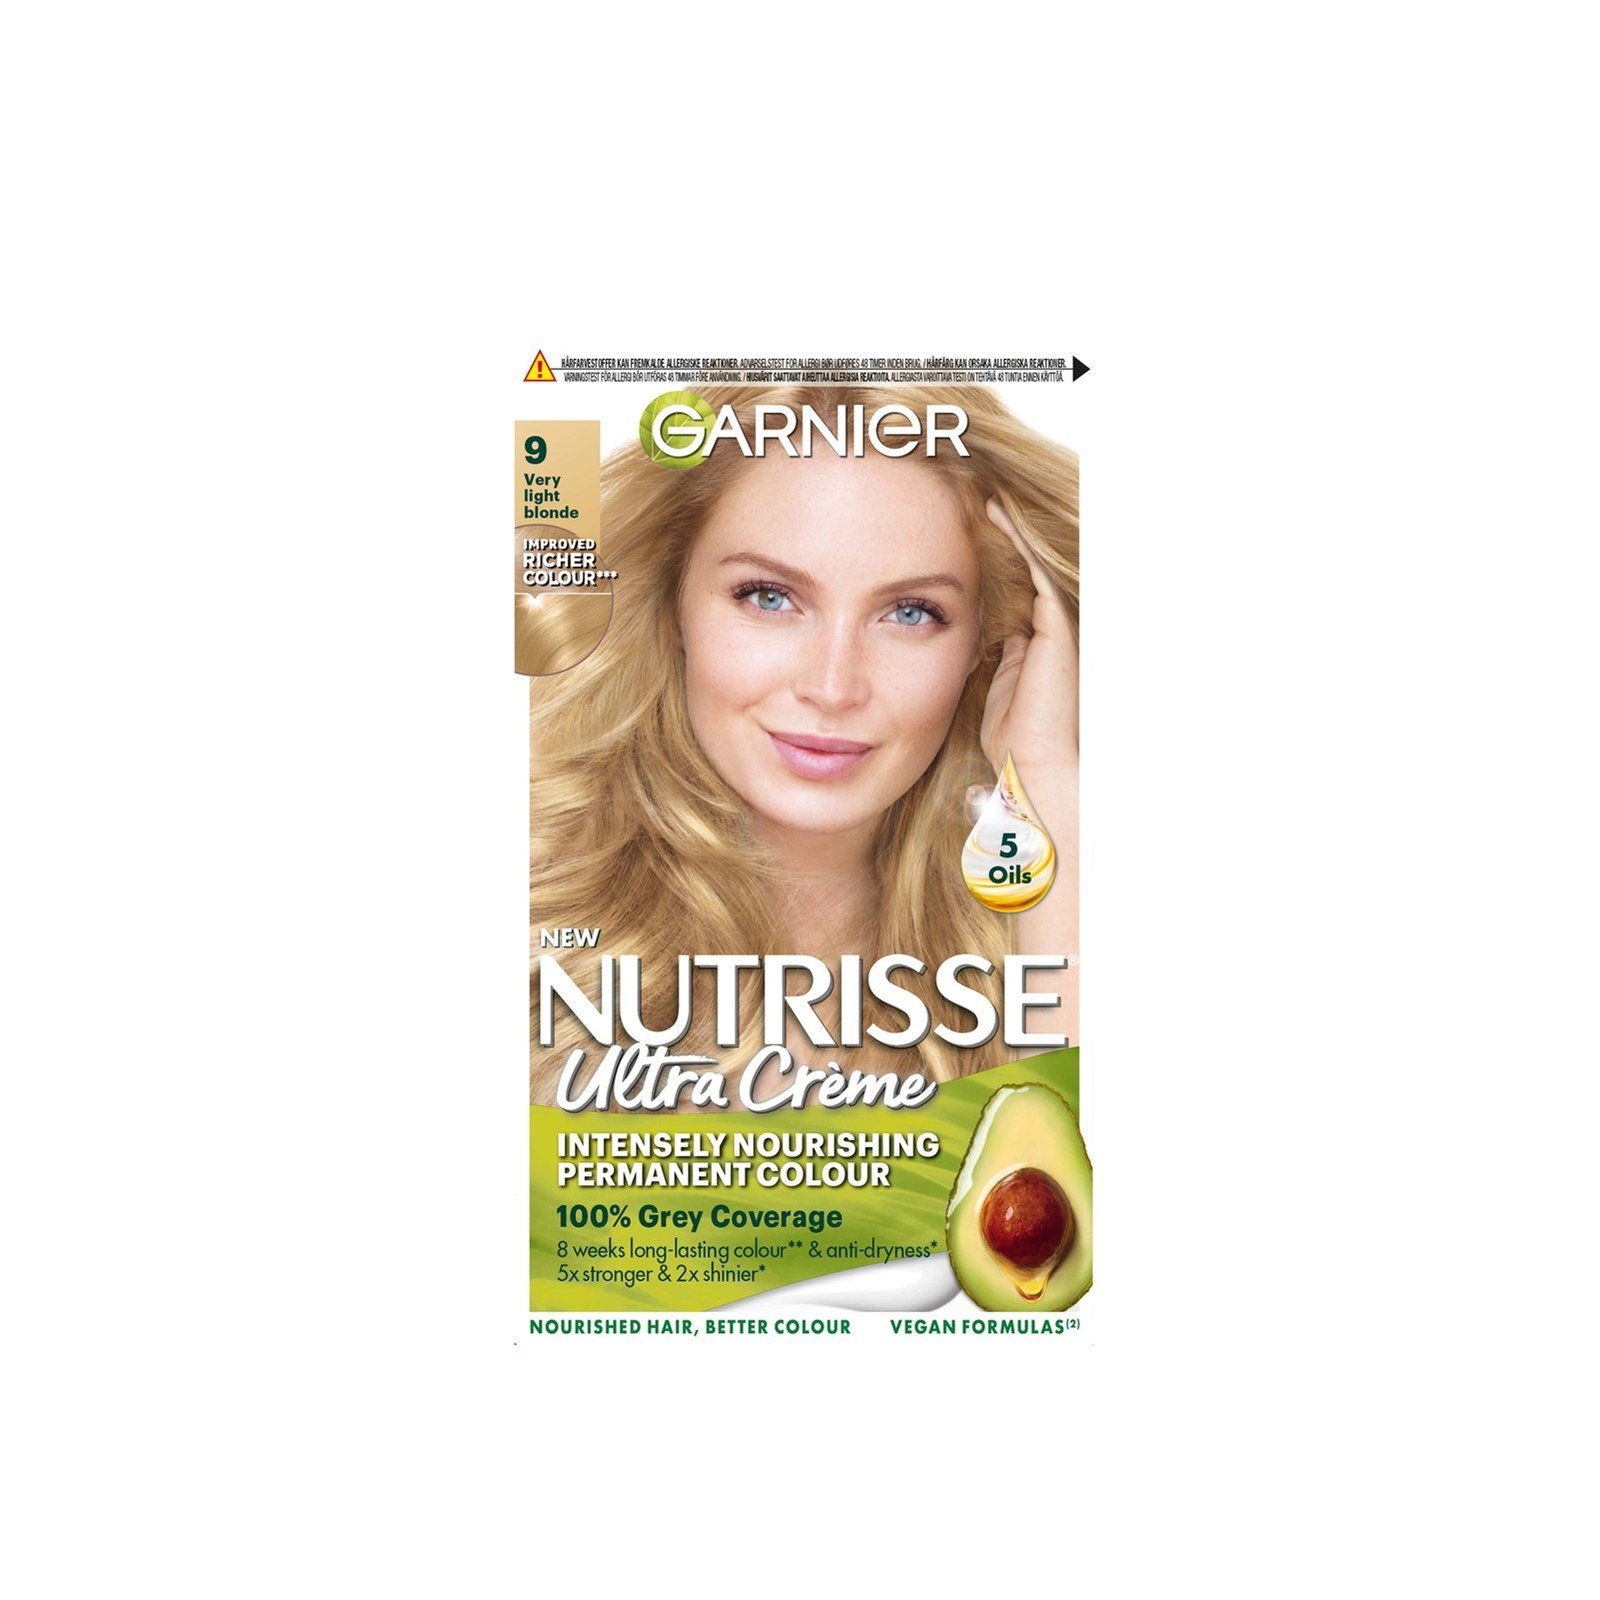 Garnier Nutrisse Ultra Crème 9 Very Light Blonde Permanent Hair Dye